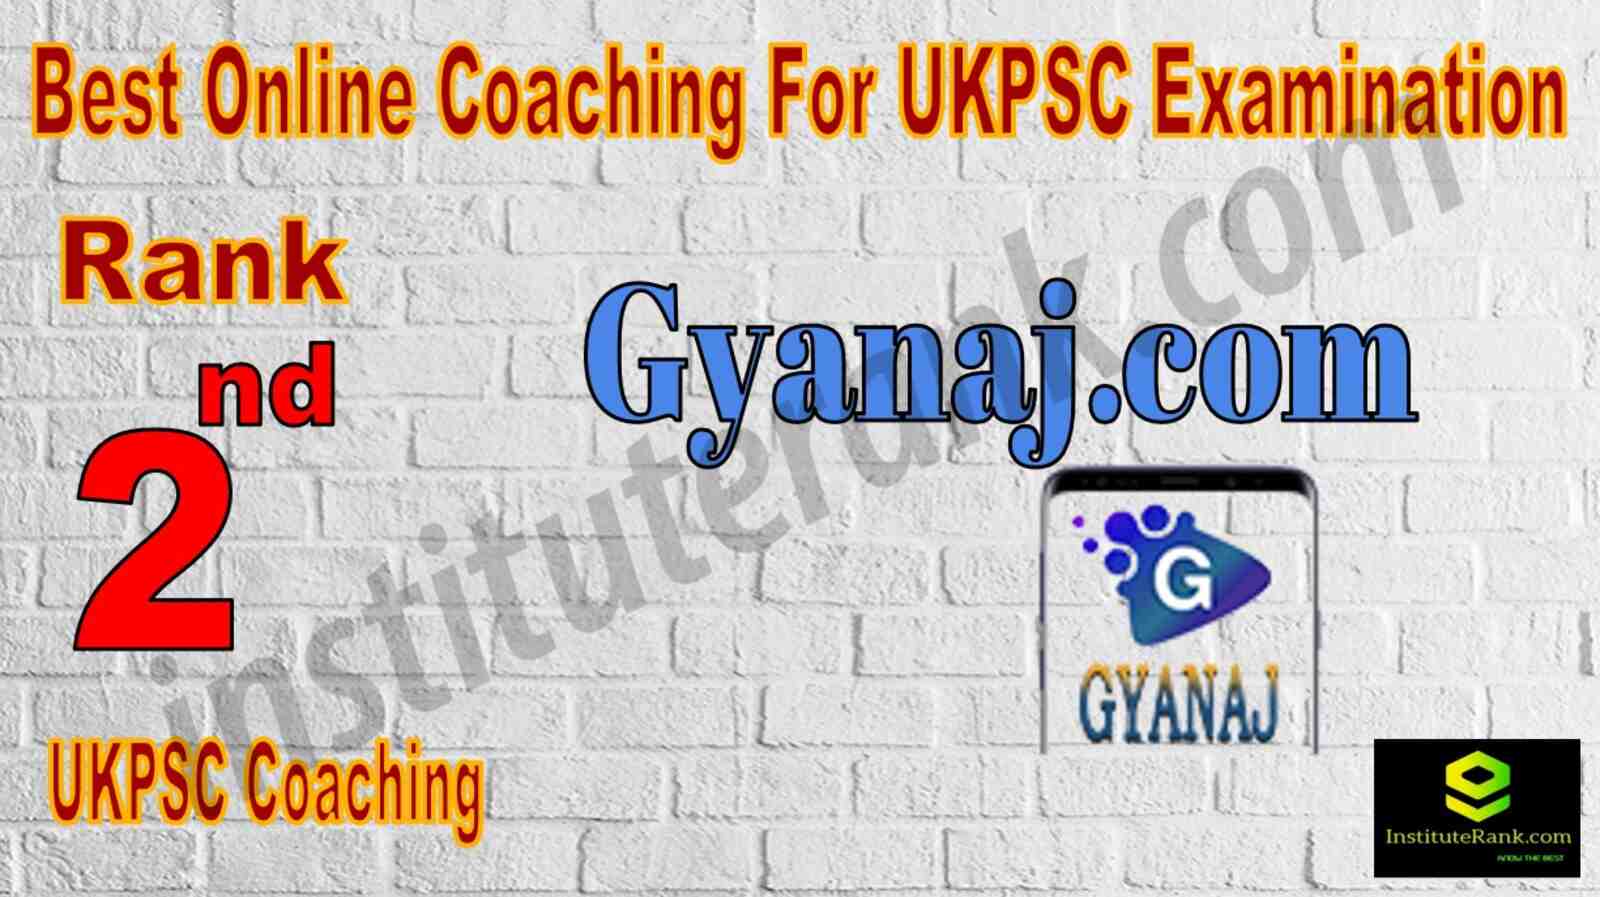 Rank 2. Best Online Coaching for the UKPSC Examination